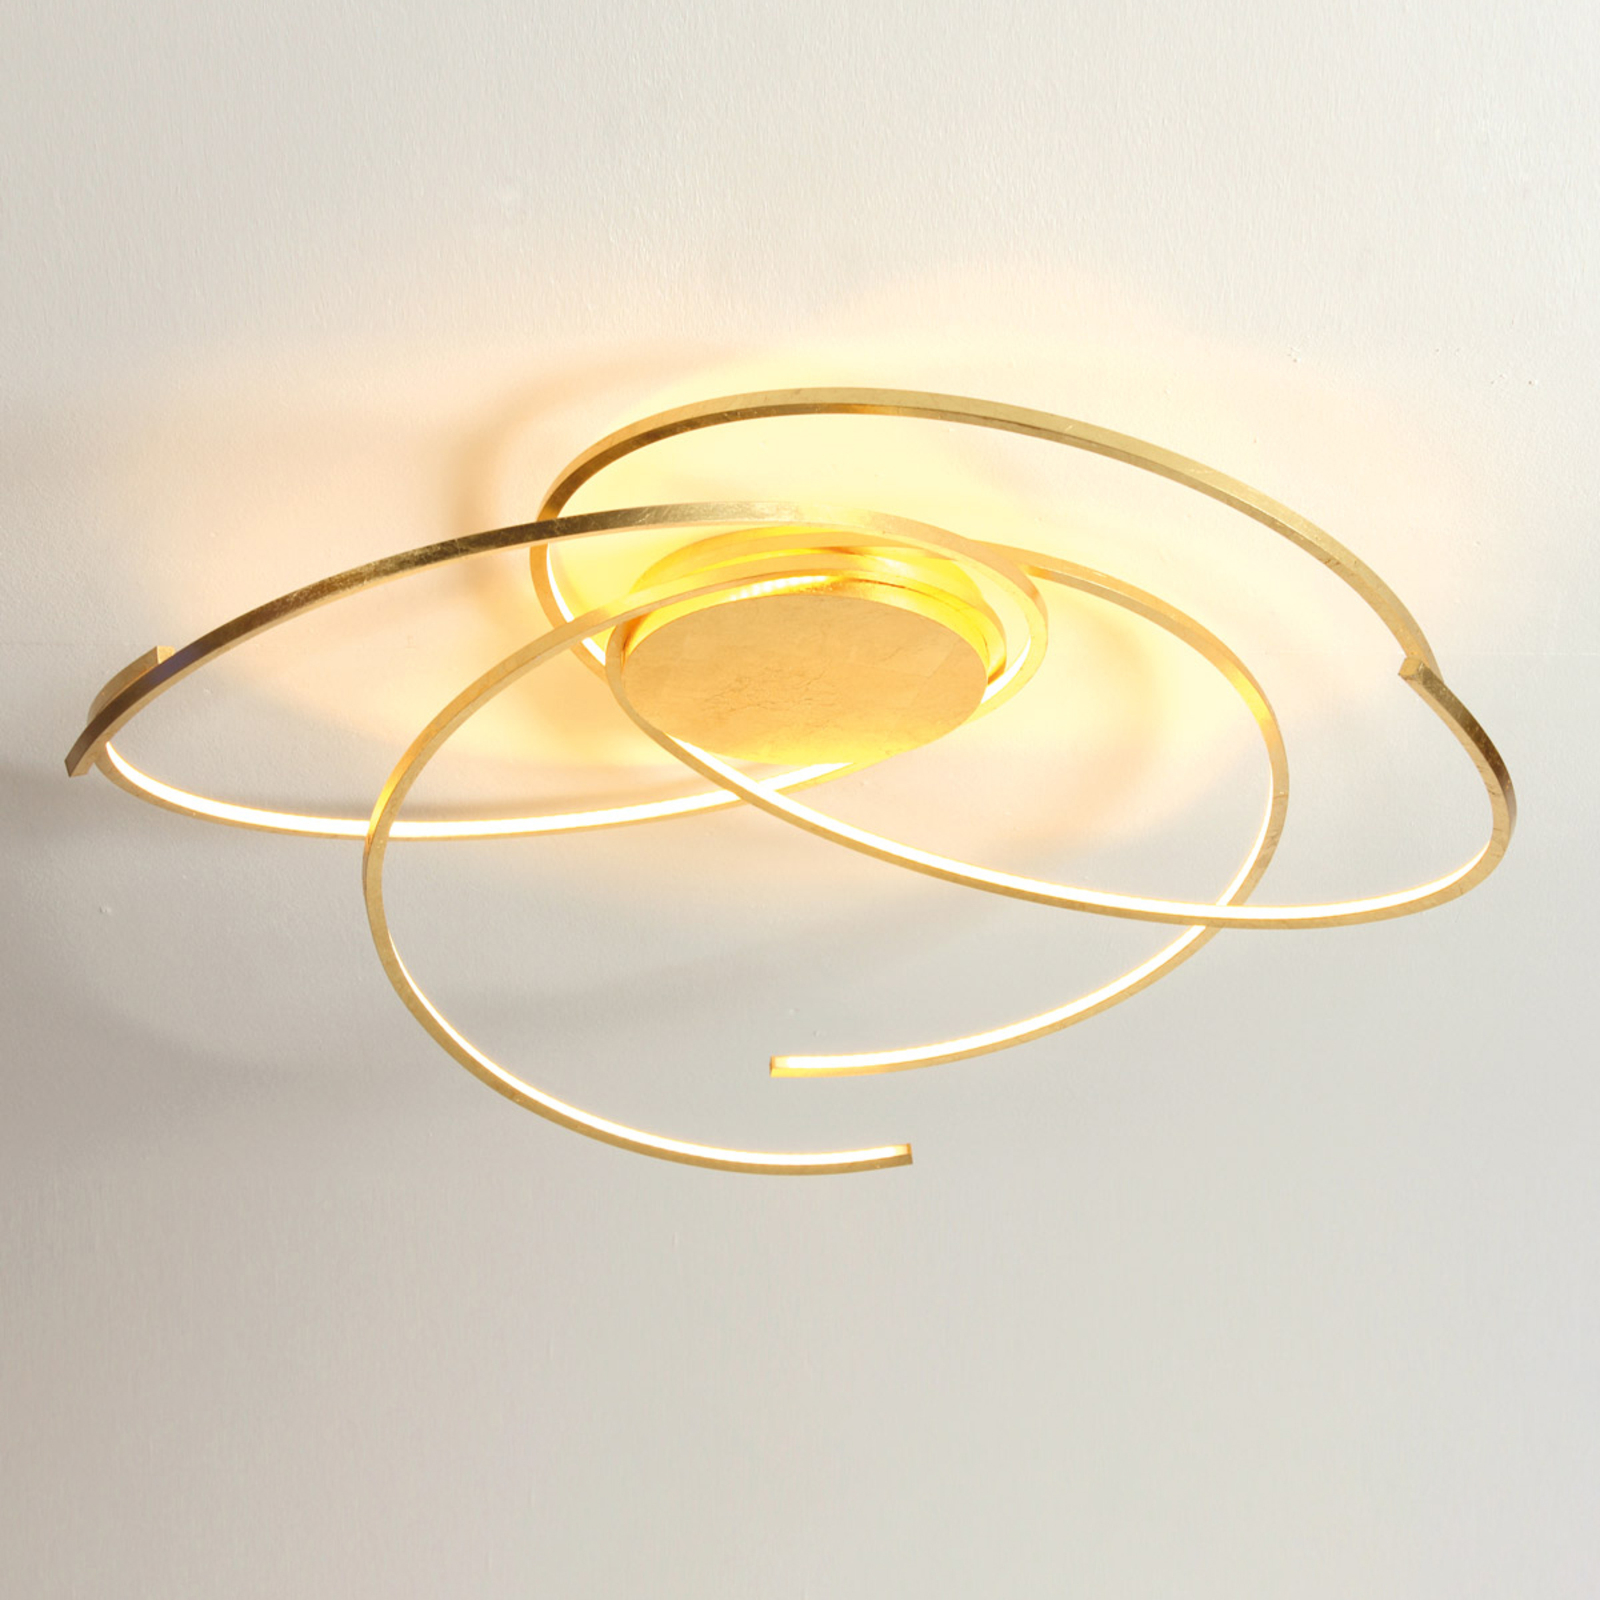 Escale Space - LED-Deckenlampe, 80 cm, Blattgold